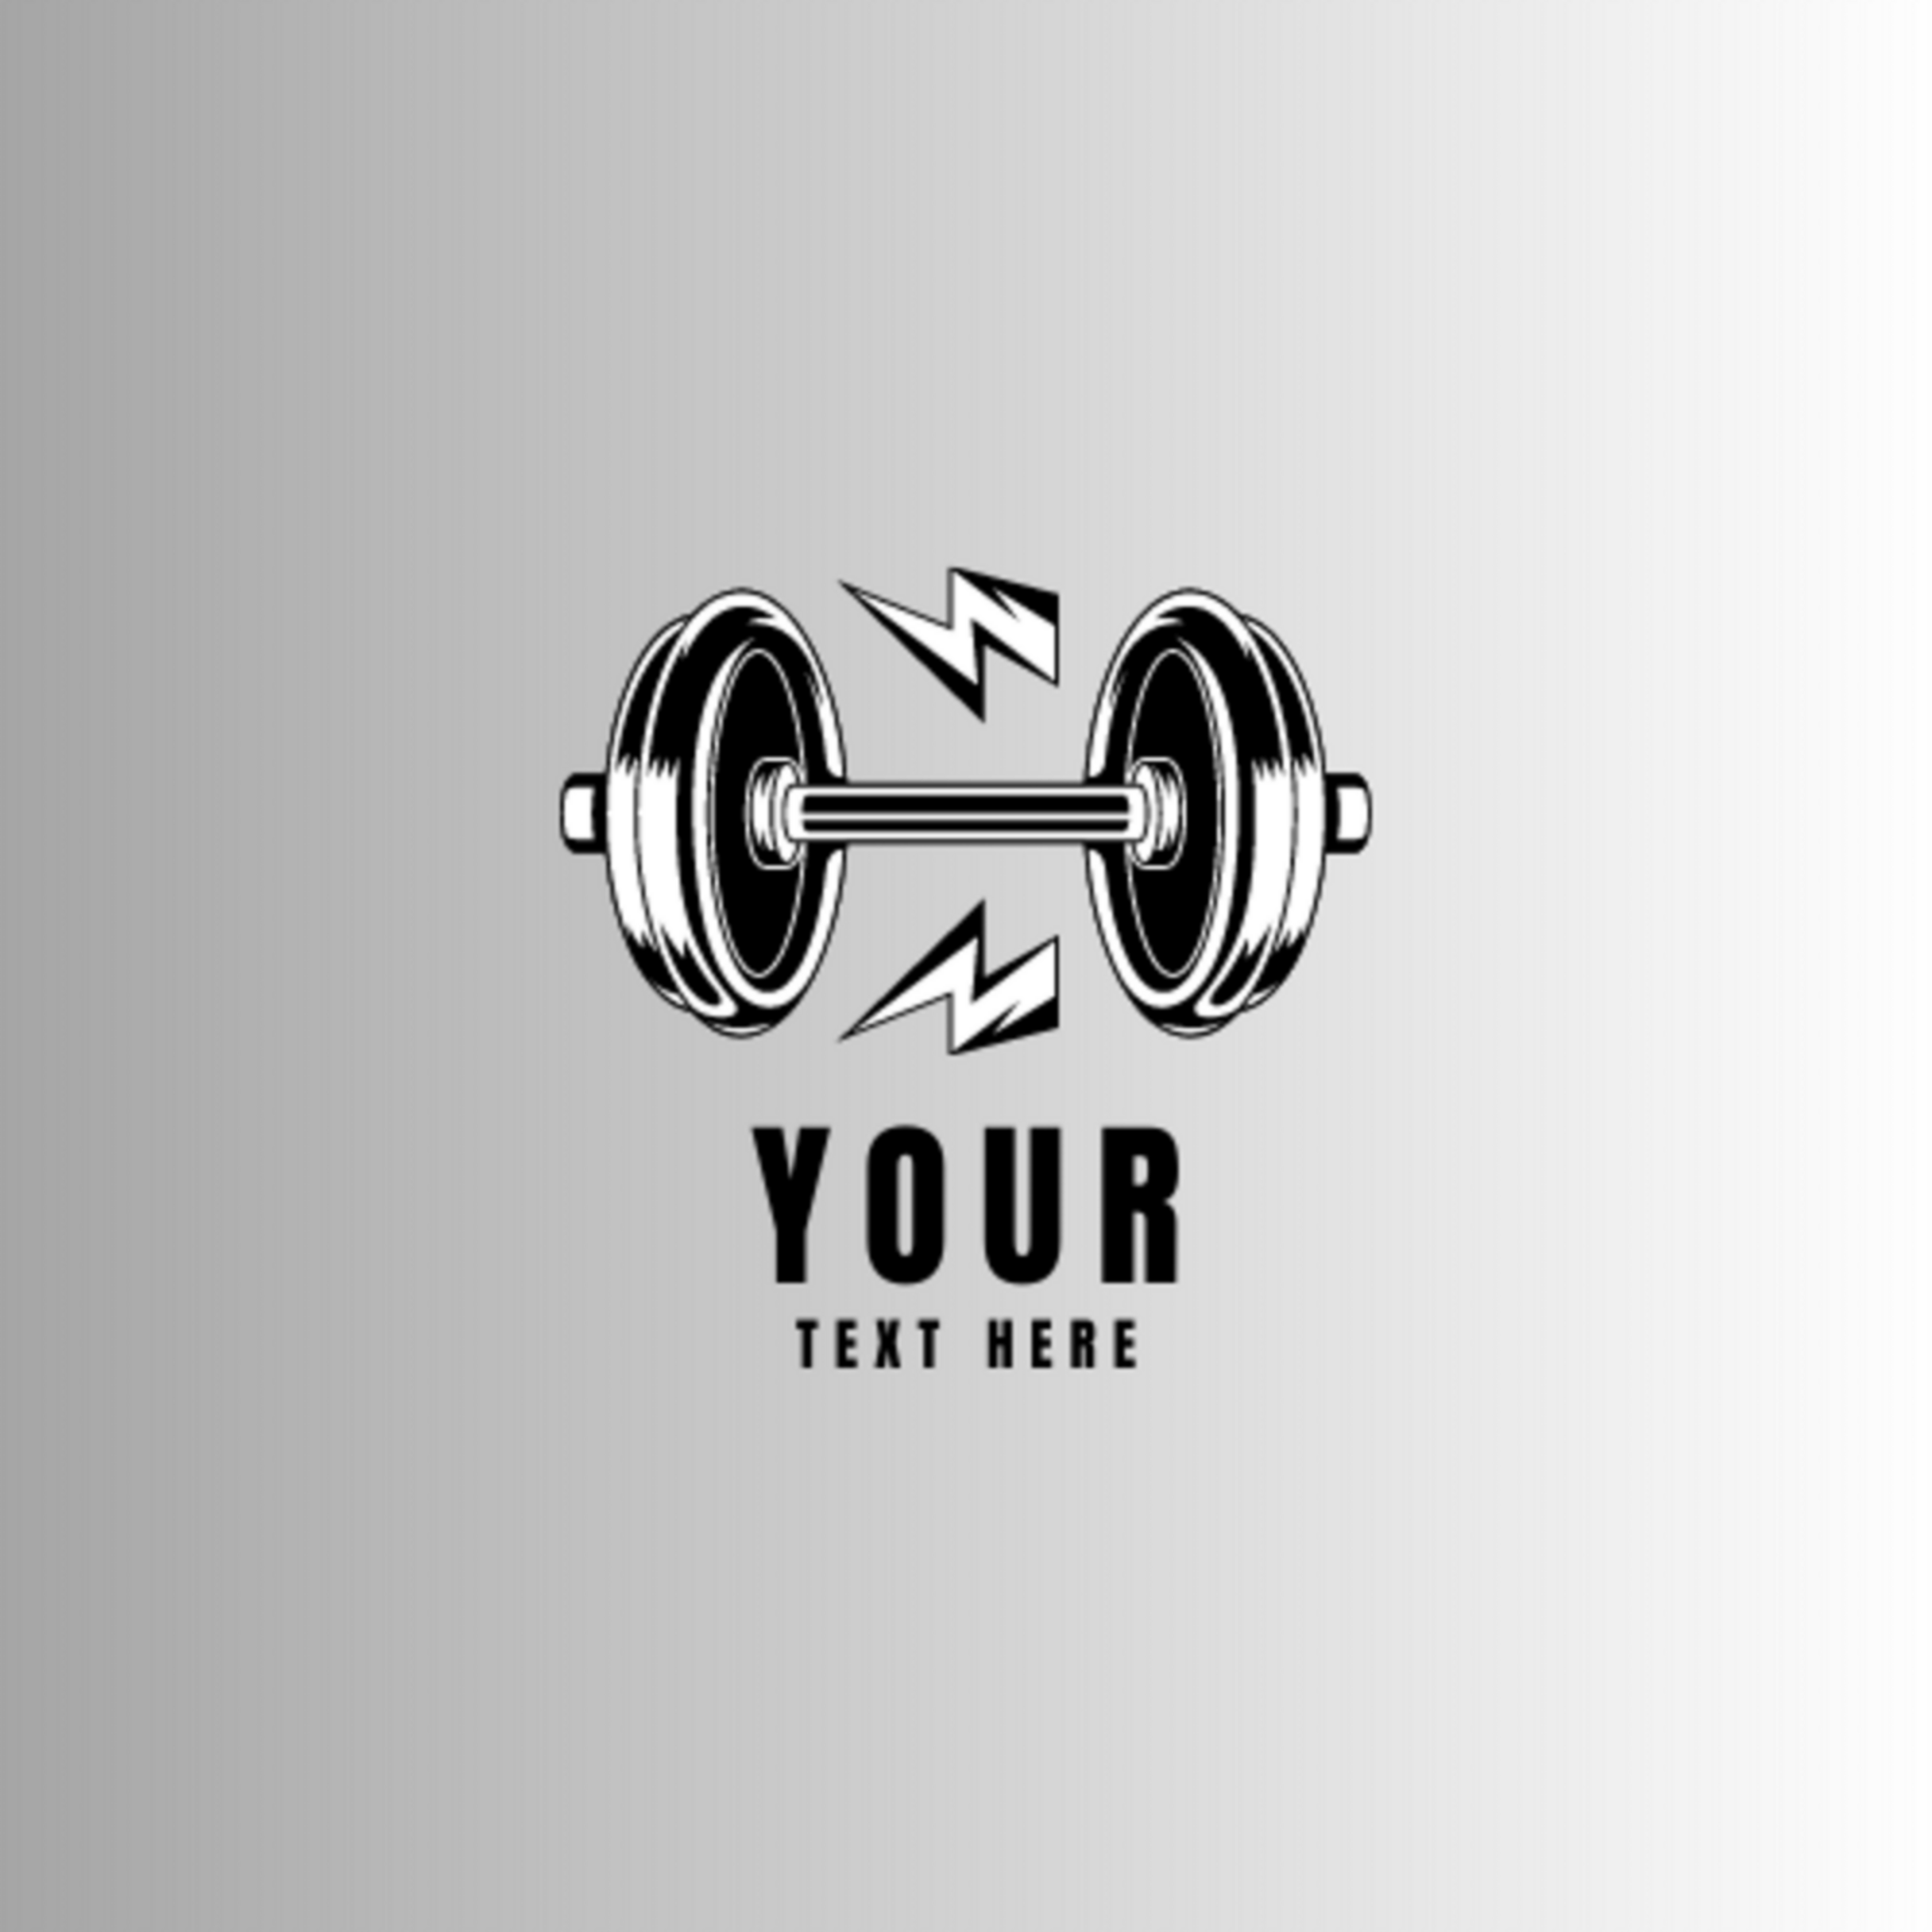 Fitness logo, Brand logo cover image.